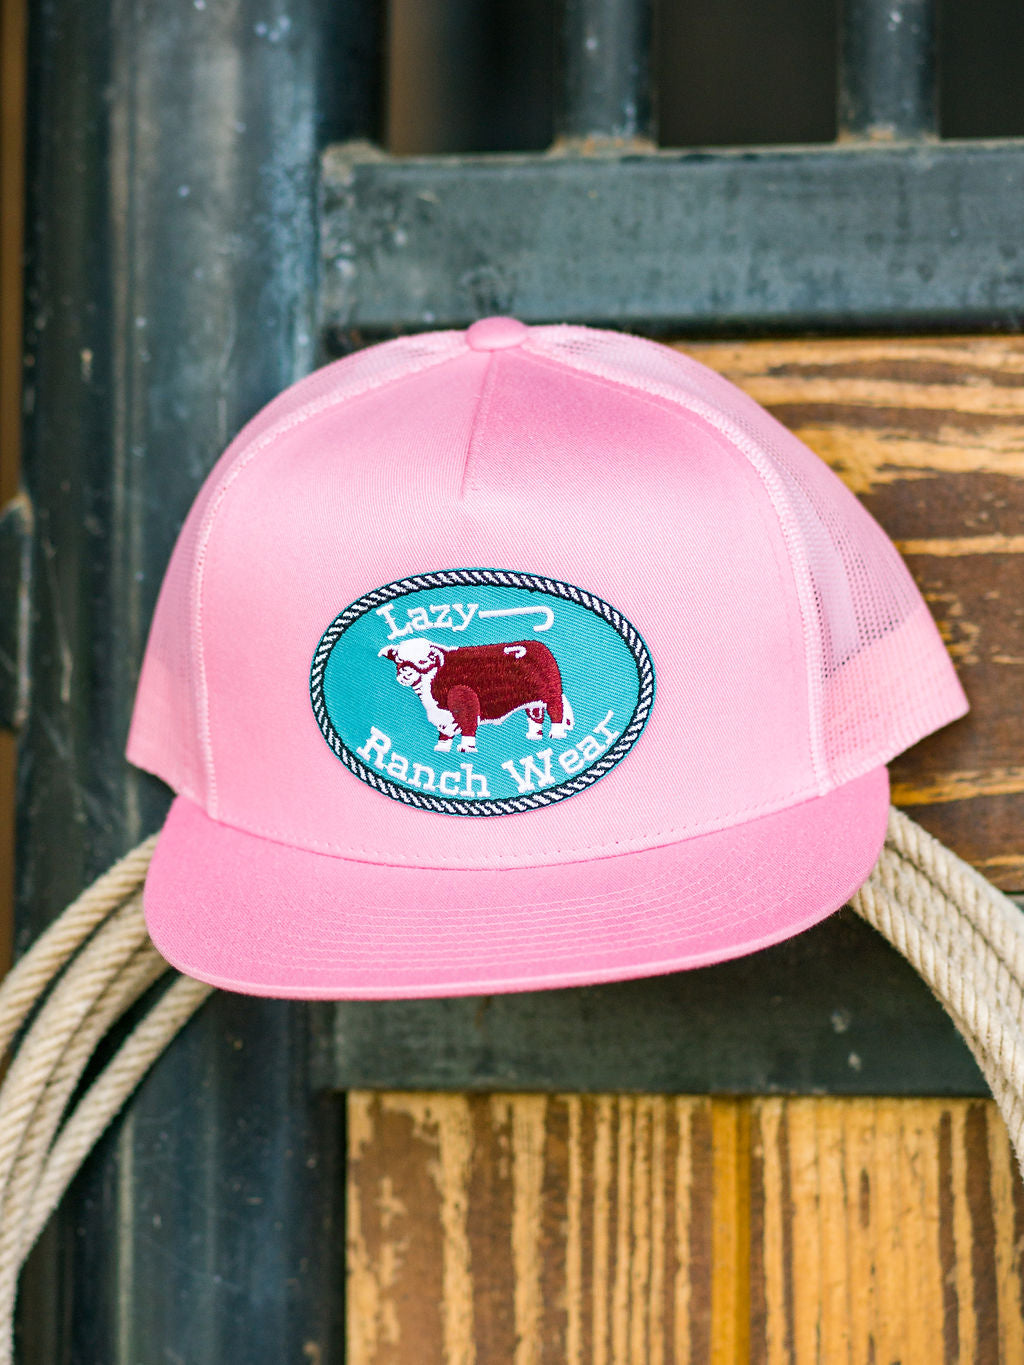 Lazy J Ranch Wear Pink & Pink 4" Original Patch Cap